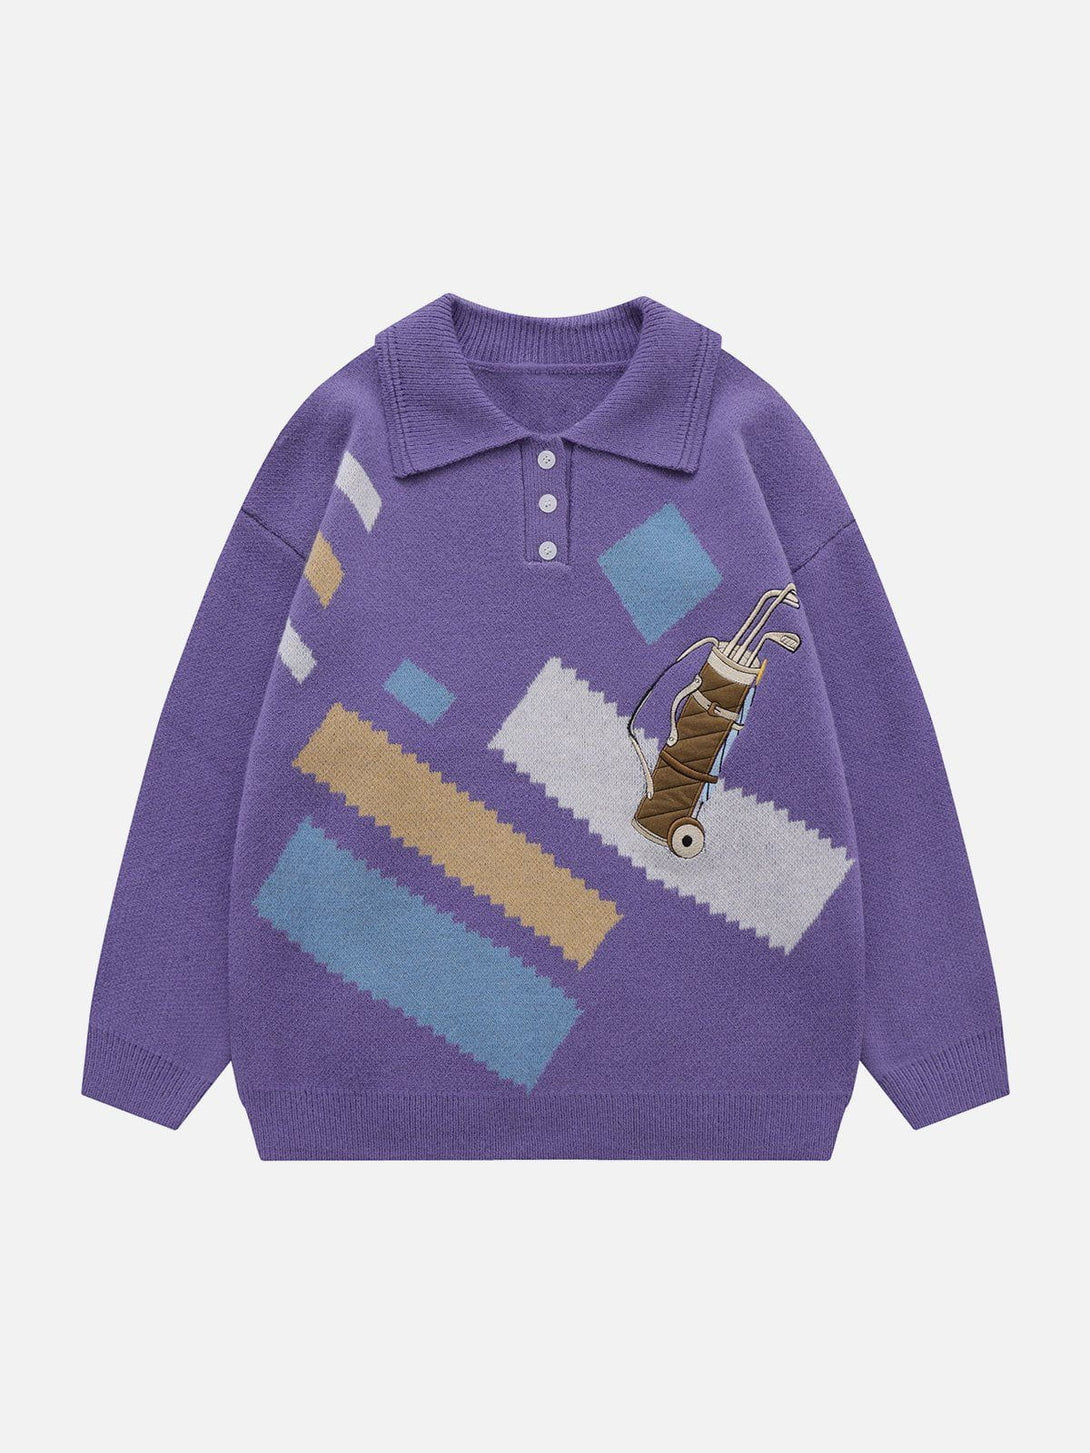 Majesda® - Golf Embroidery Polo Collar Sweater outfit ideas streetwear fashion